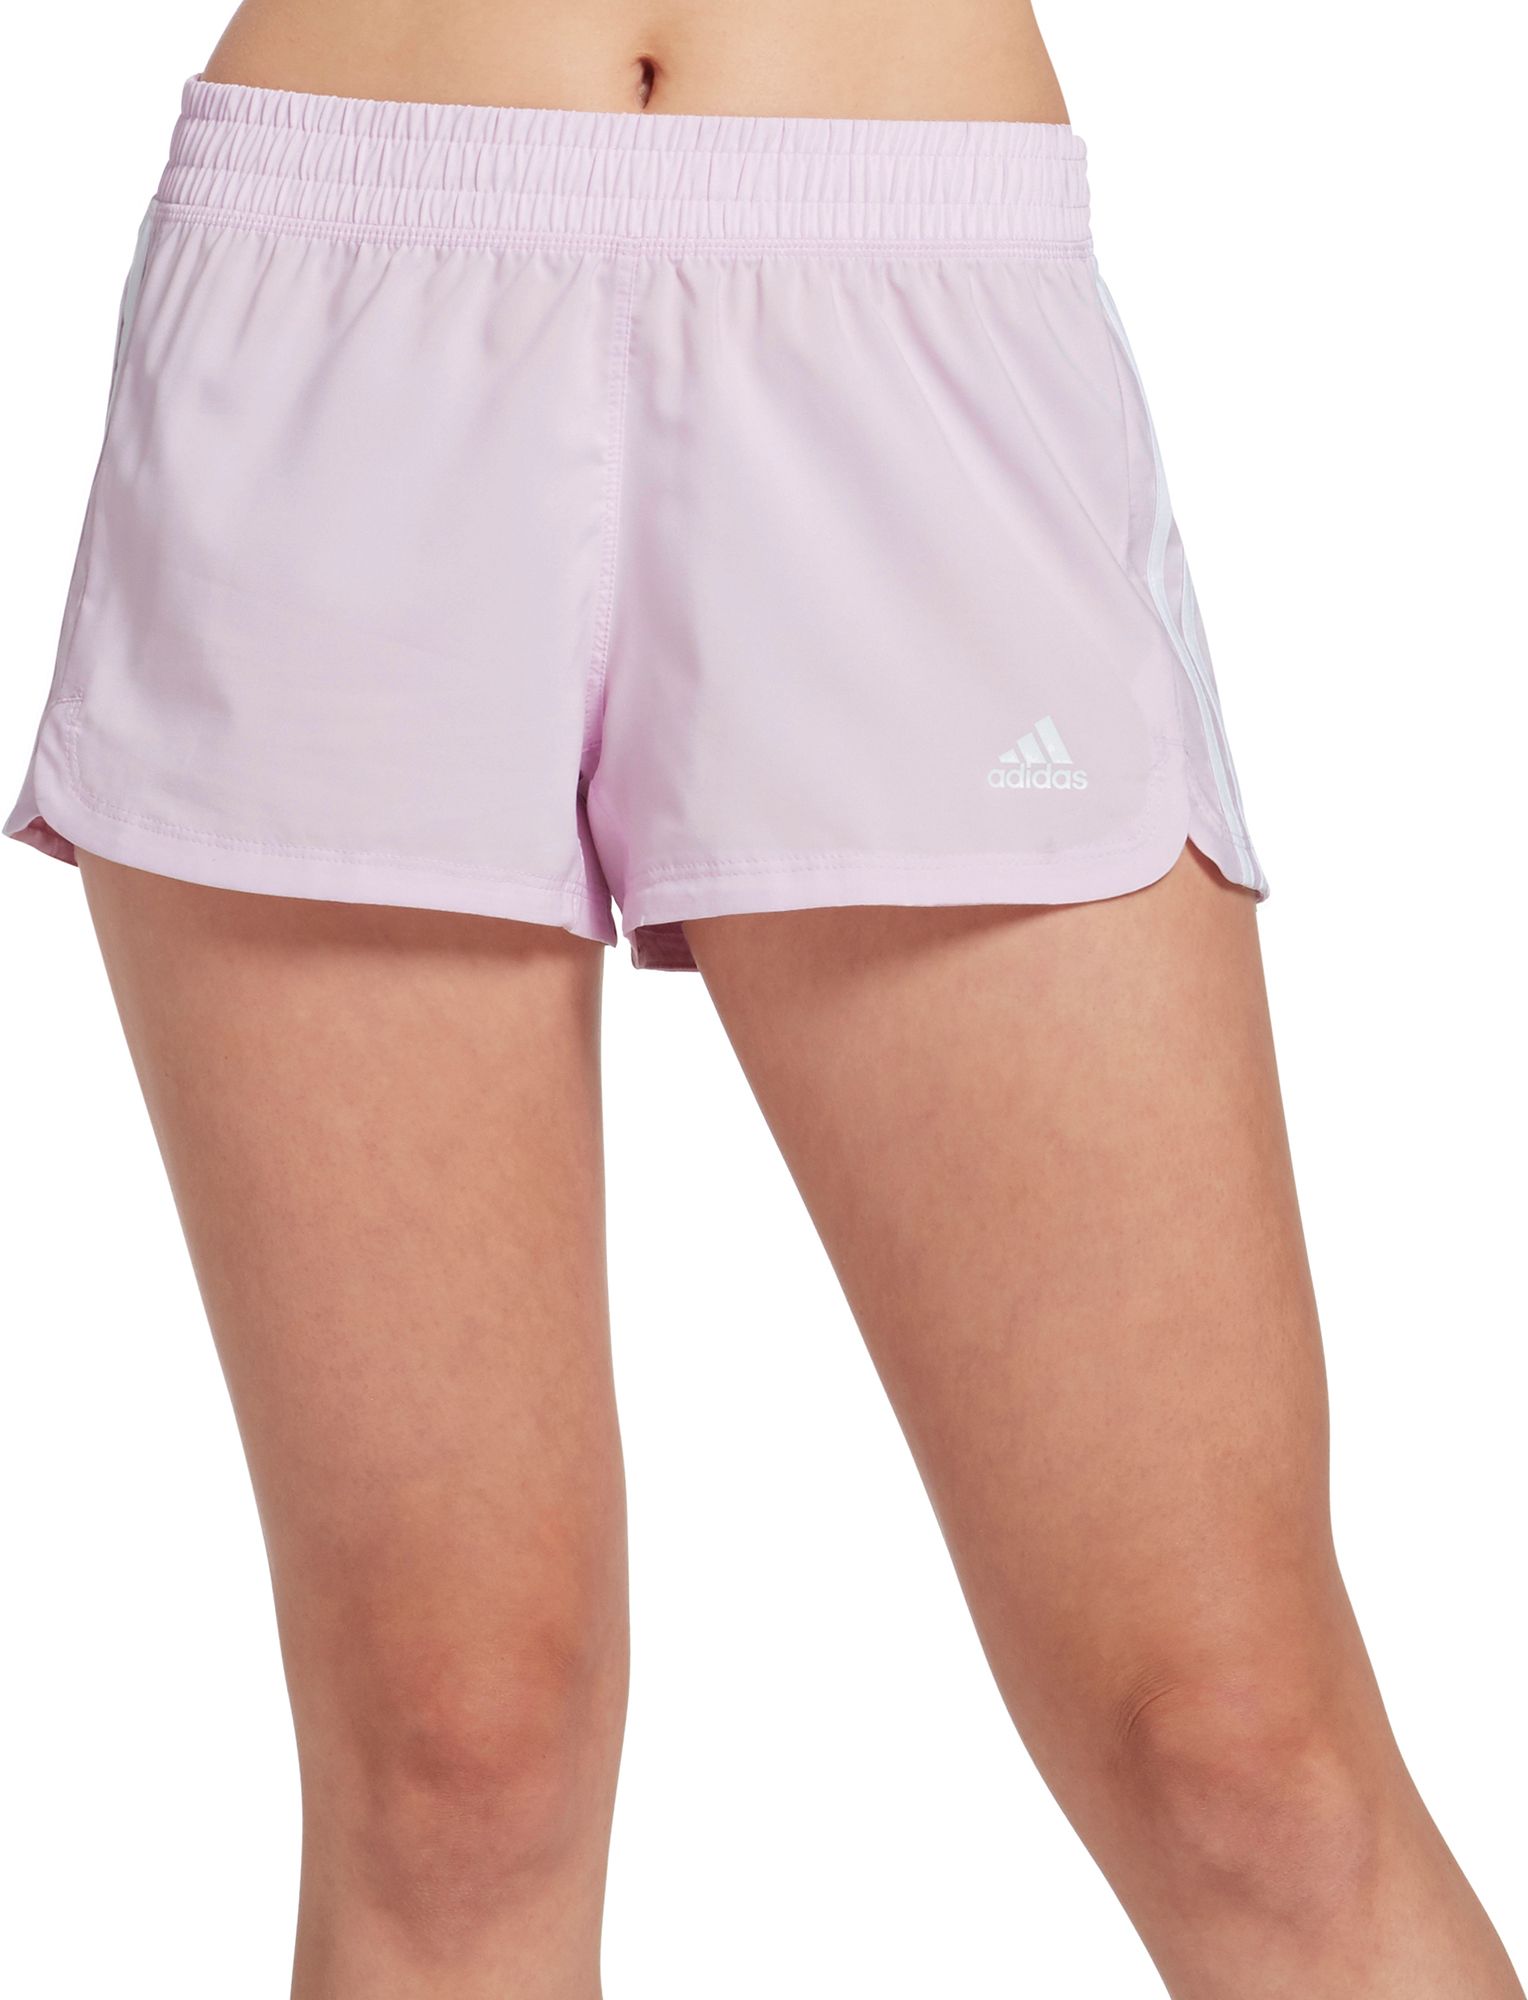 adidas 3 stripe poly shorts pink